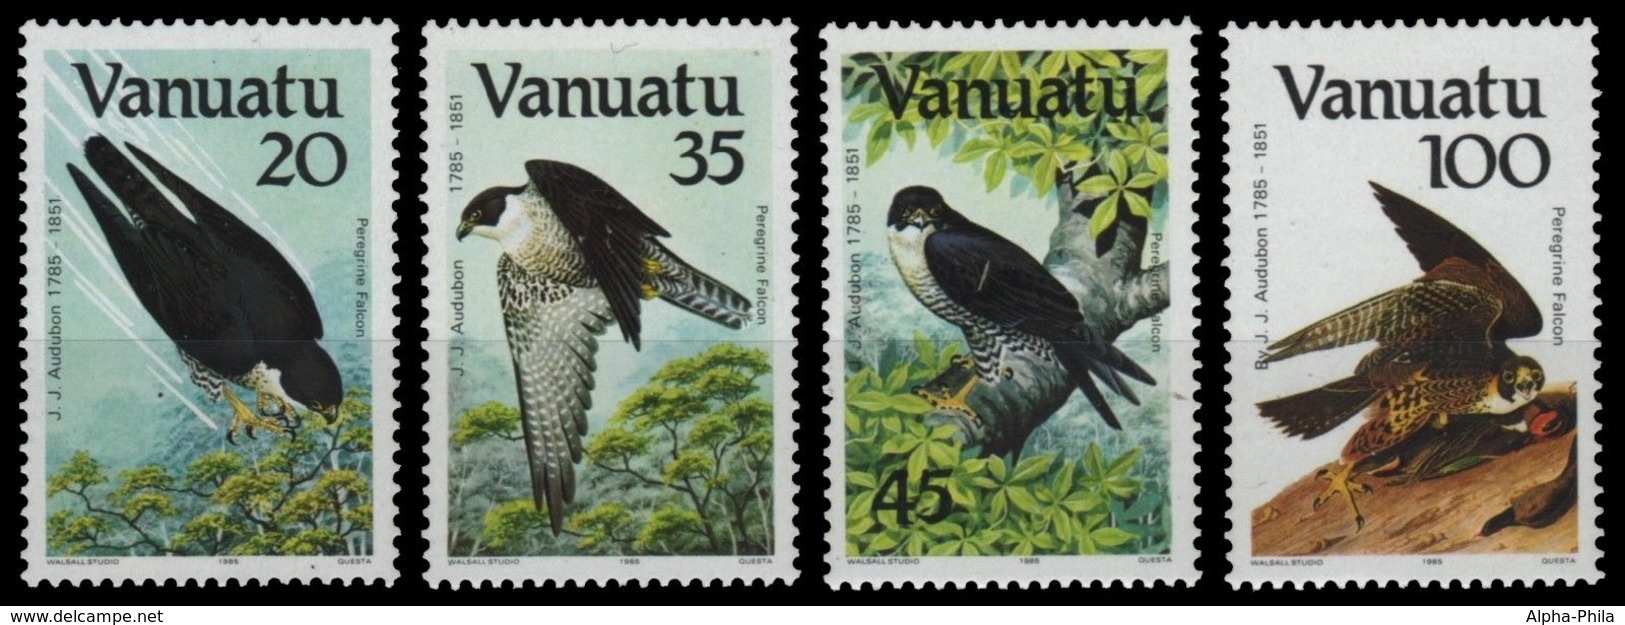 Vanuatu 1985 - Mi-Nr. 694-697 ** - MNH - Vögel / Birds - Audubon - Vanuatu (1980-...)